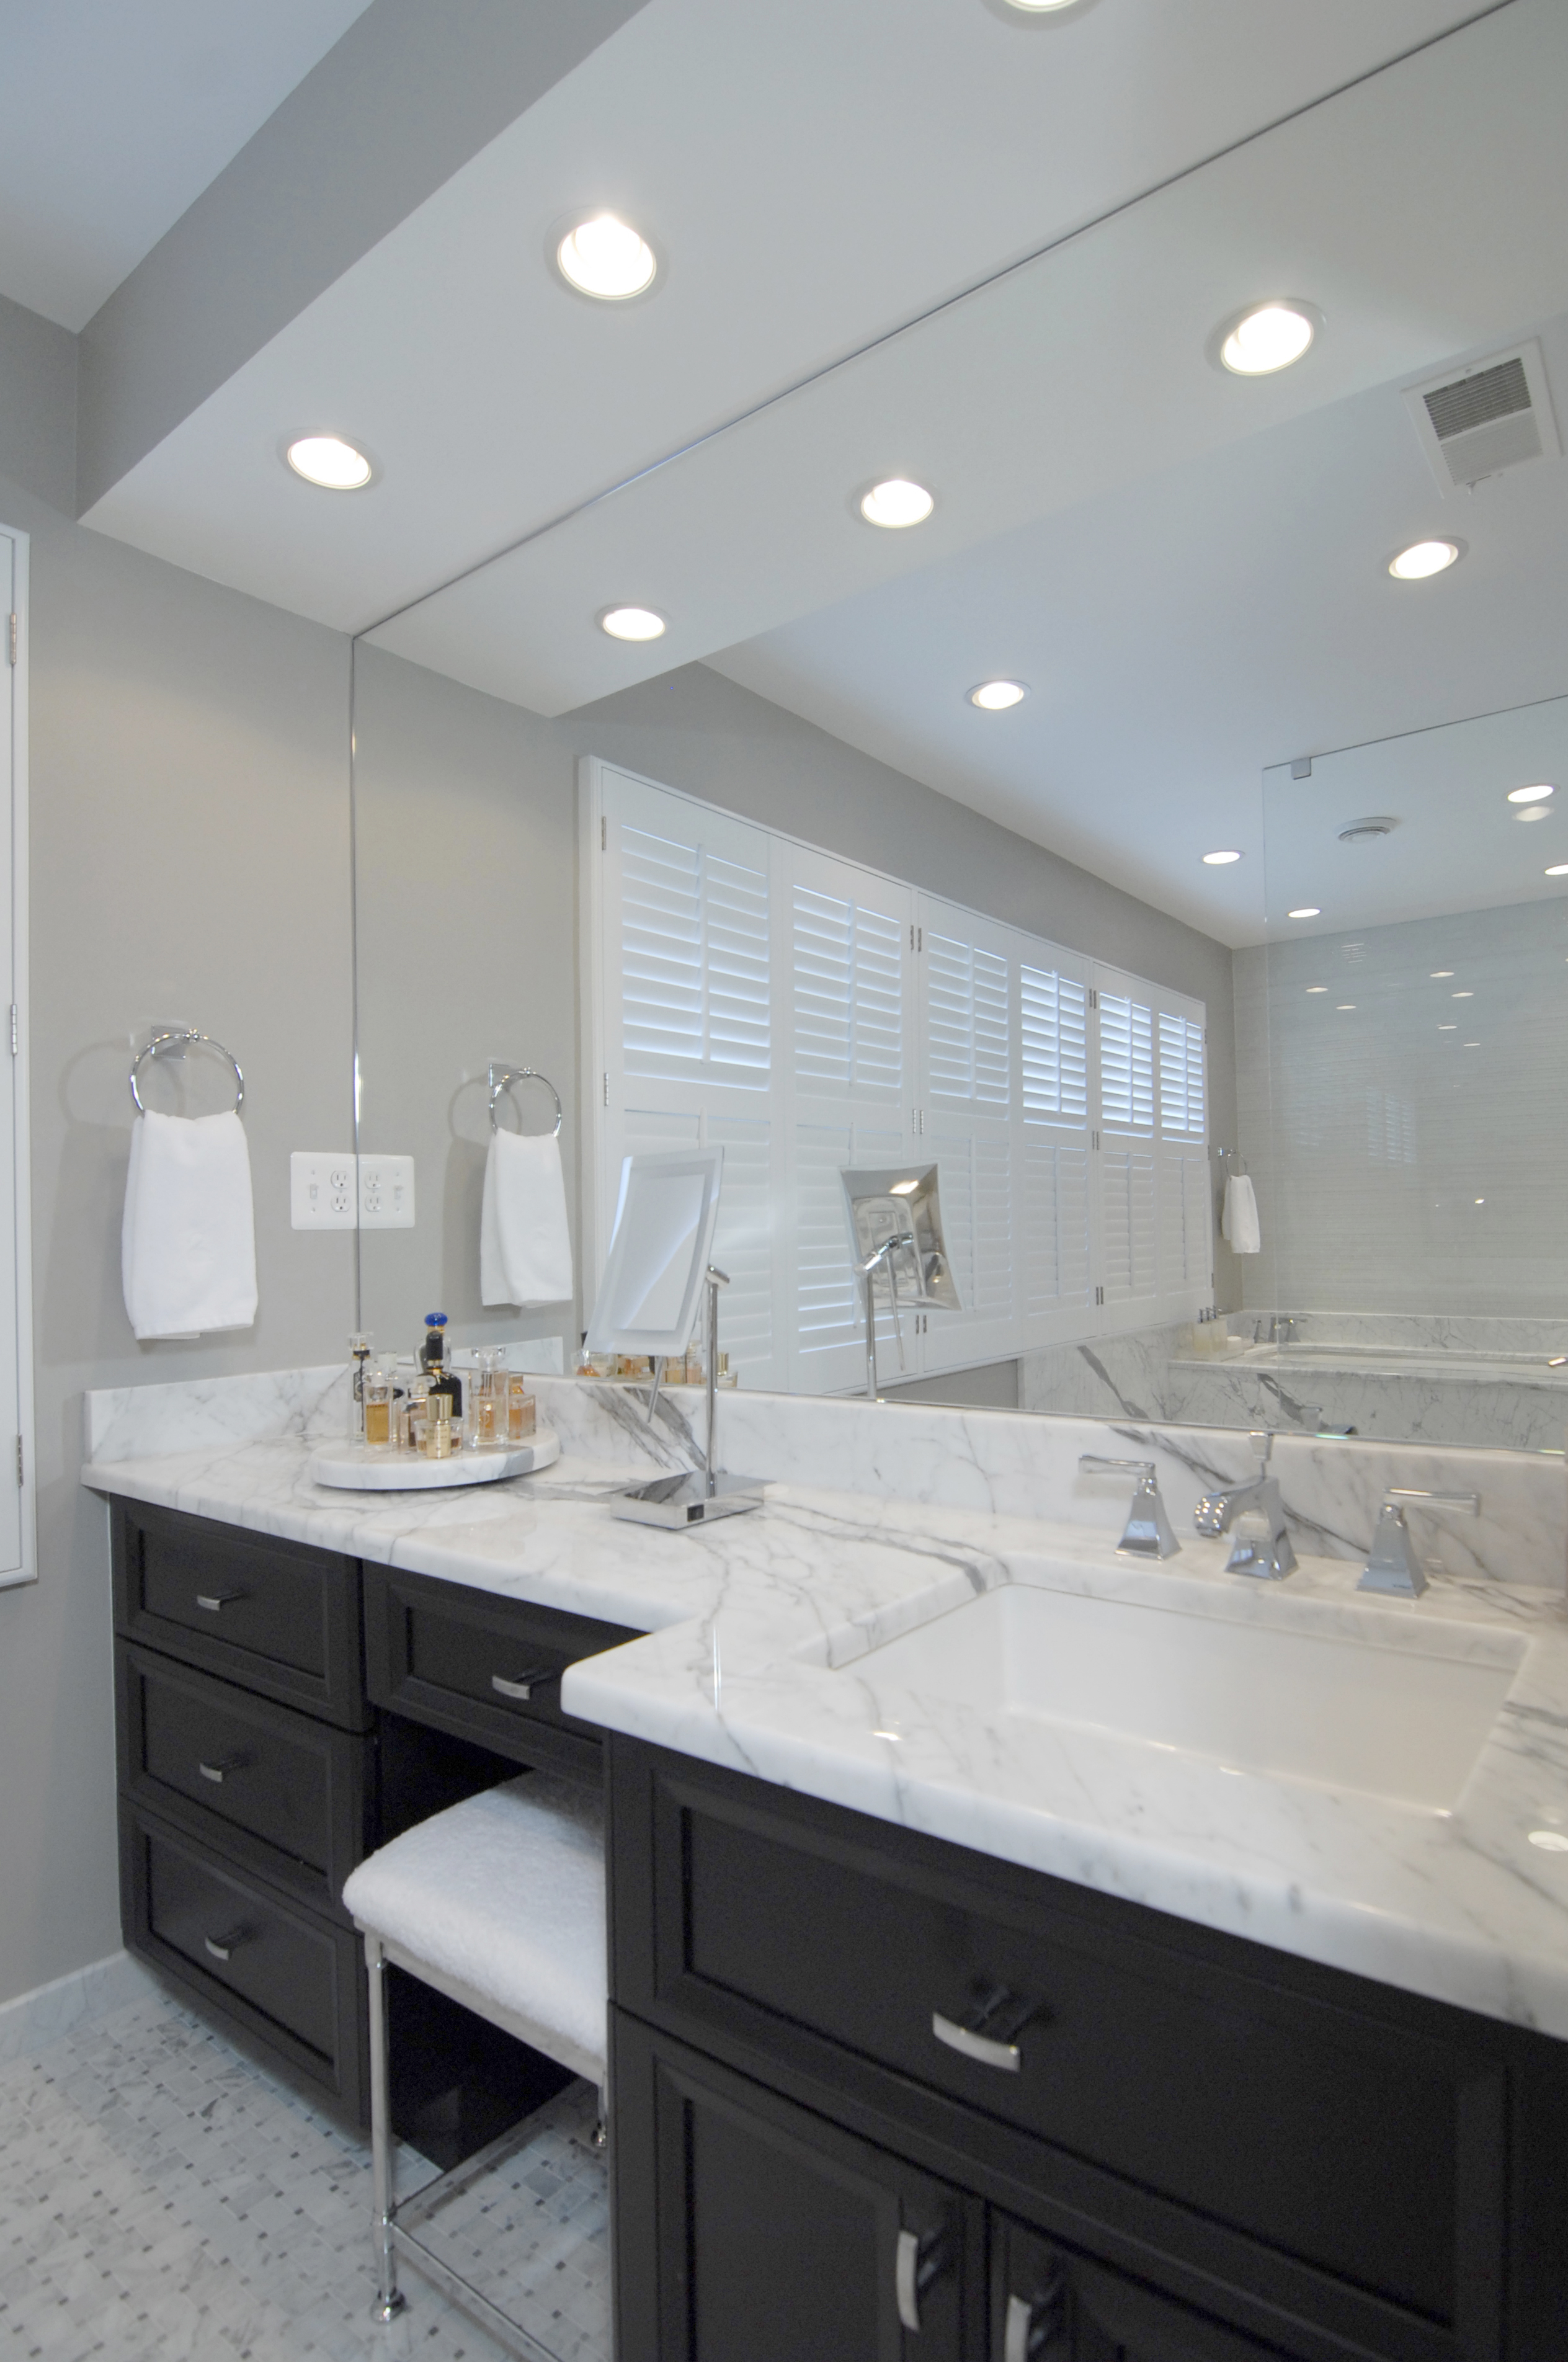 Bathroom Design Trends Most Desired, Bathroom Vanities With Seating Area